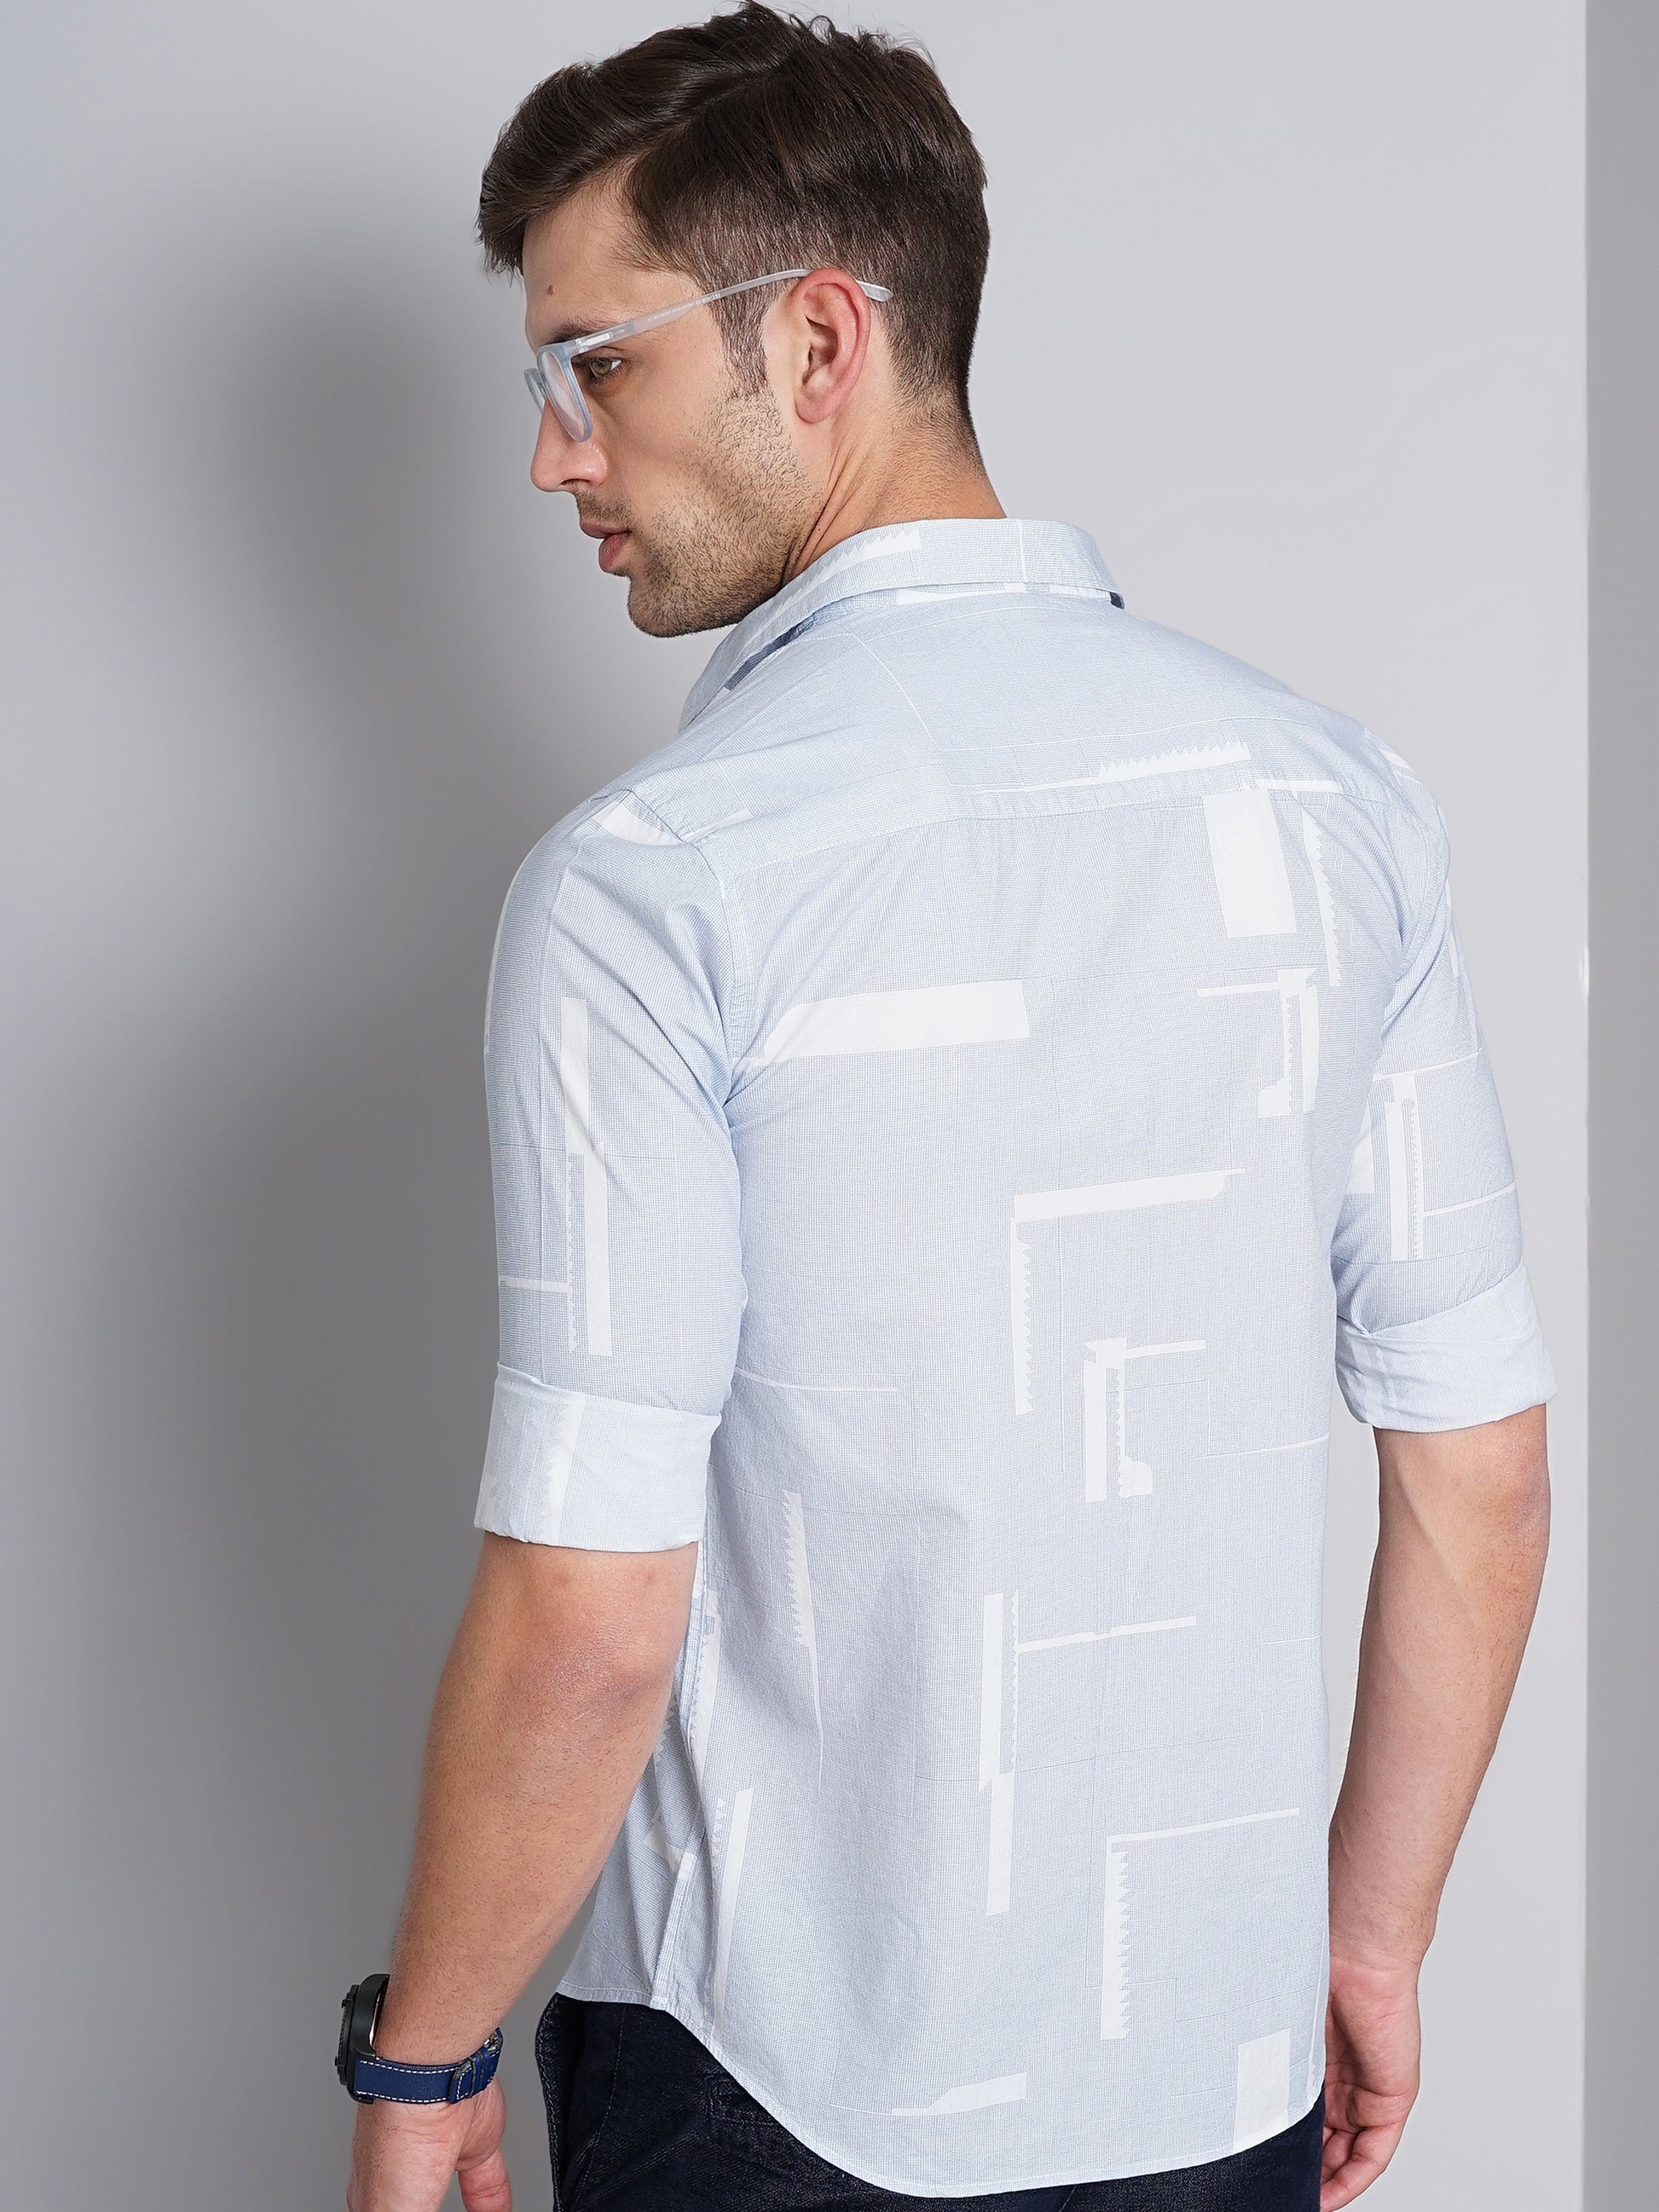 Cool Grey Abstract Printed Shirt for Men 